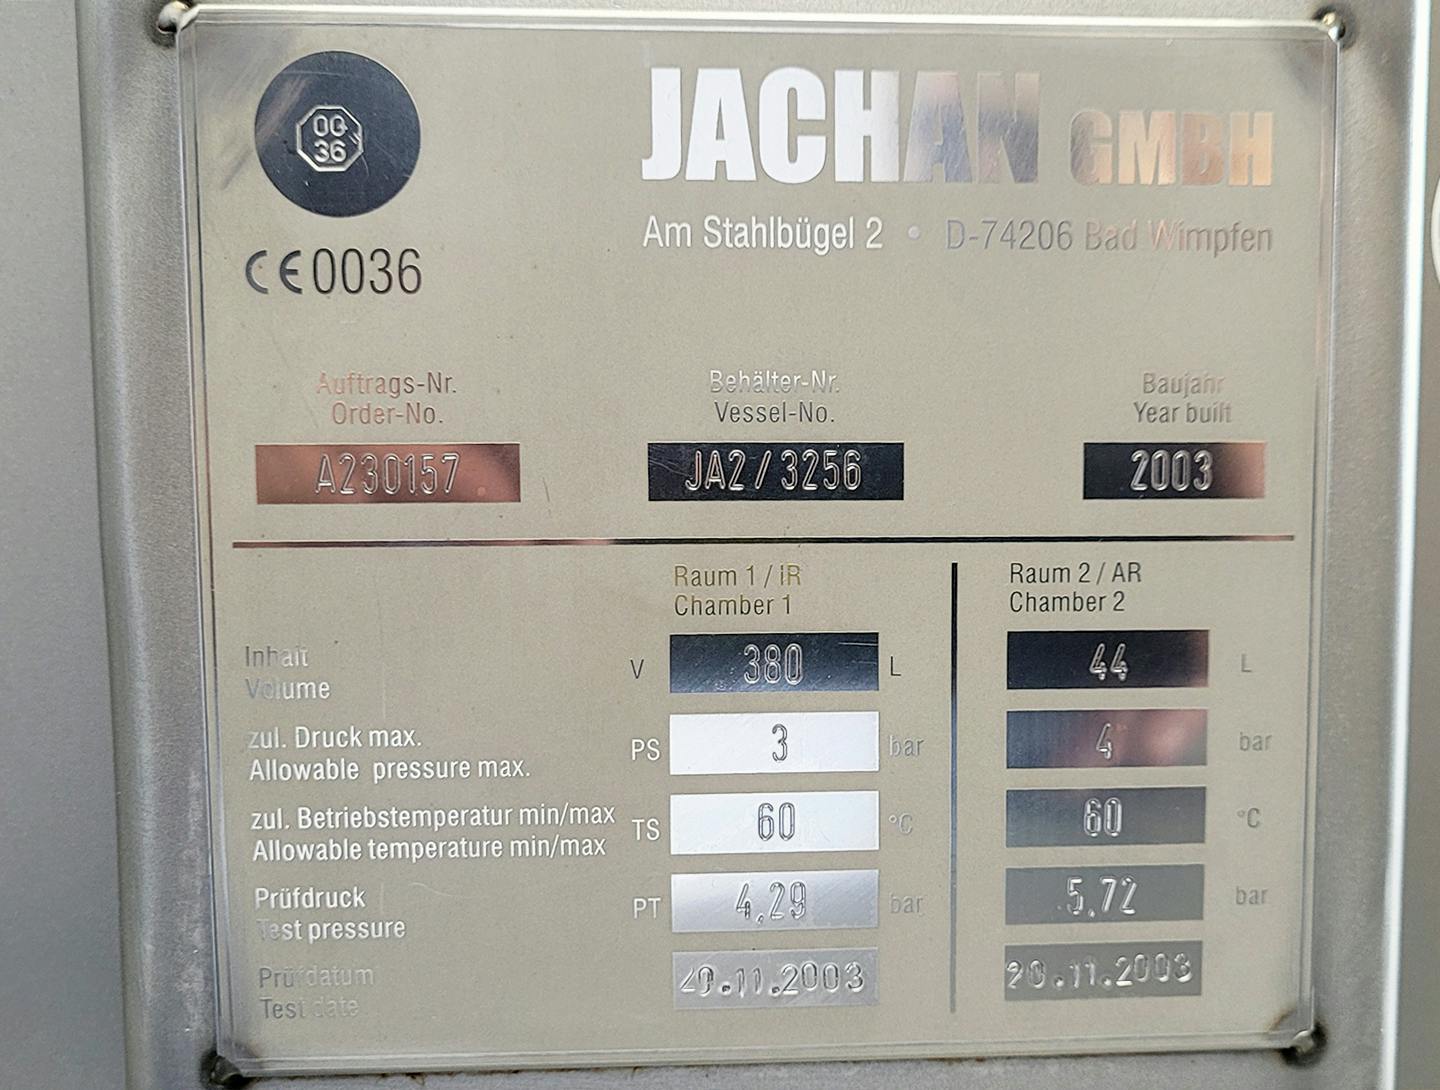 Jachan EK 3 380 Ltr. - Reattore in acciaio inox - image 17